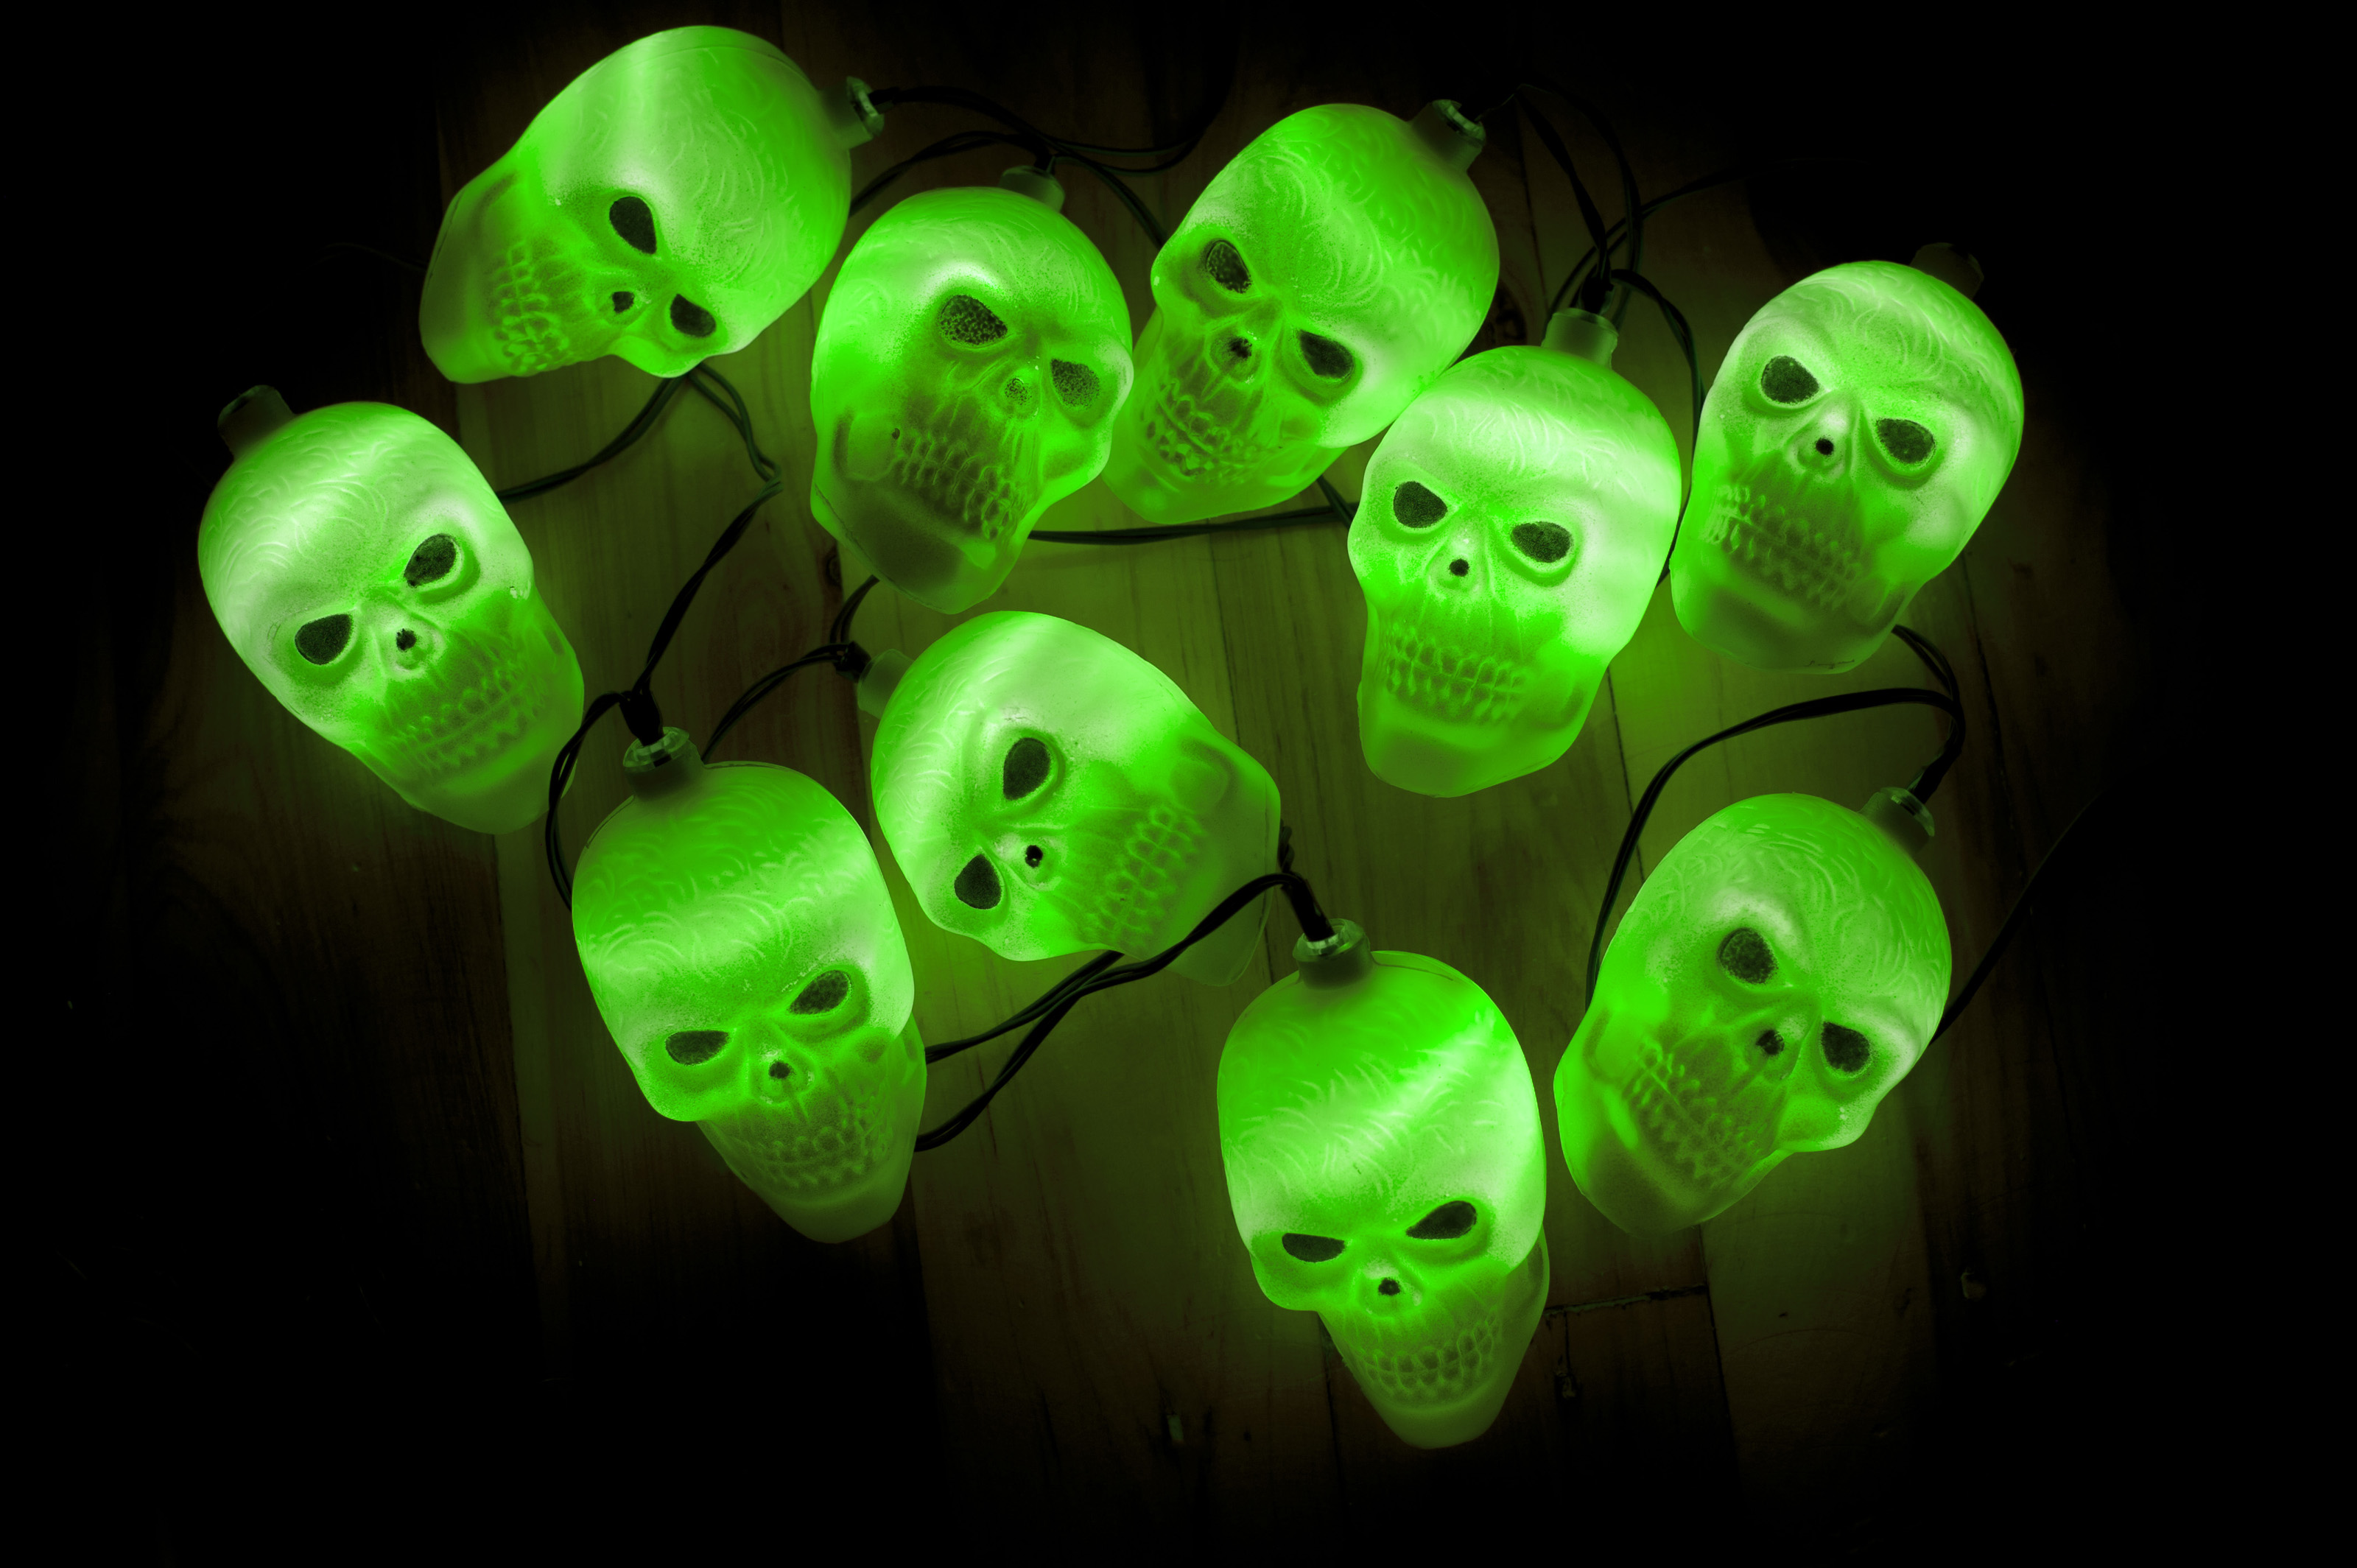 green halloween lights image of cluster of glowing green halloween lights. 